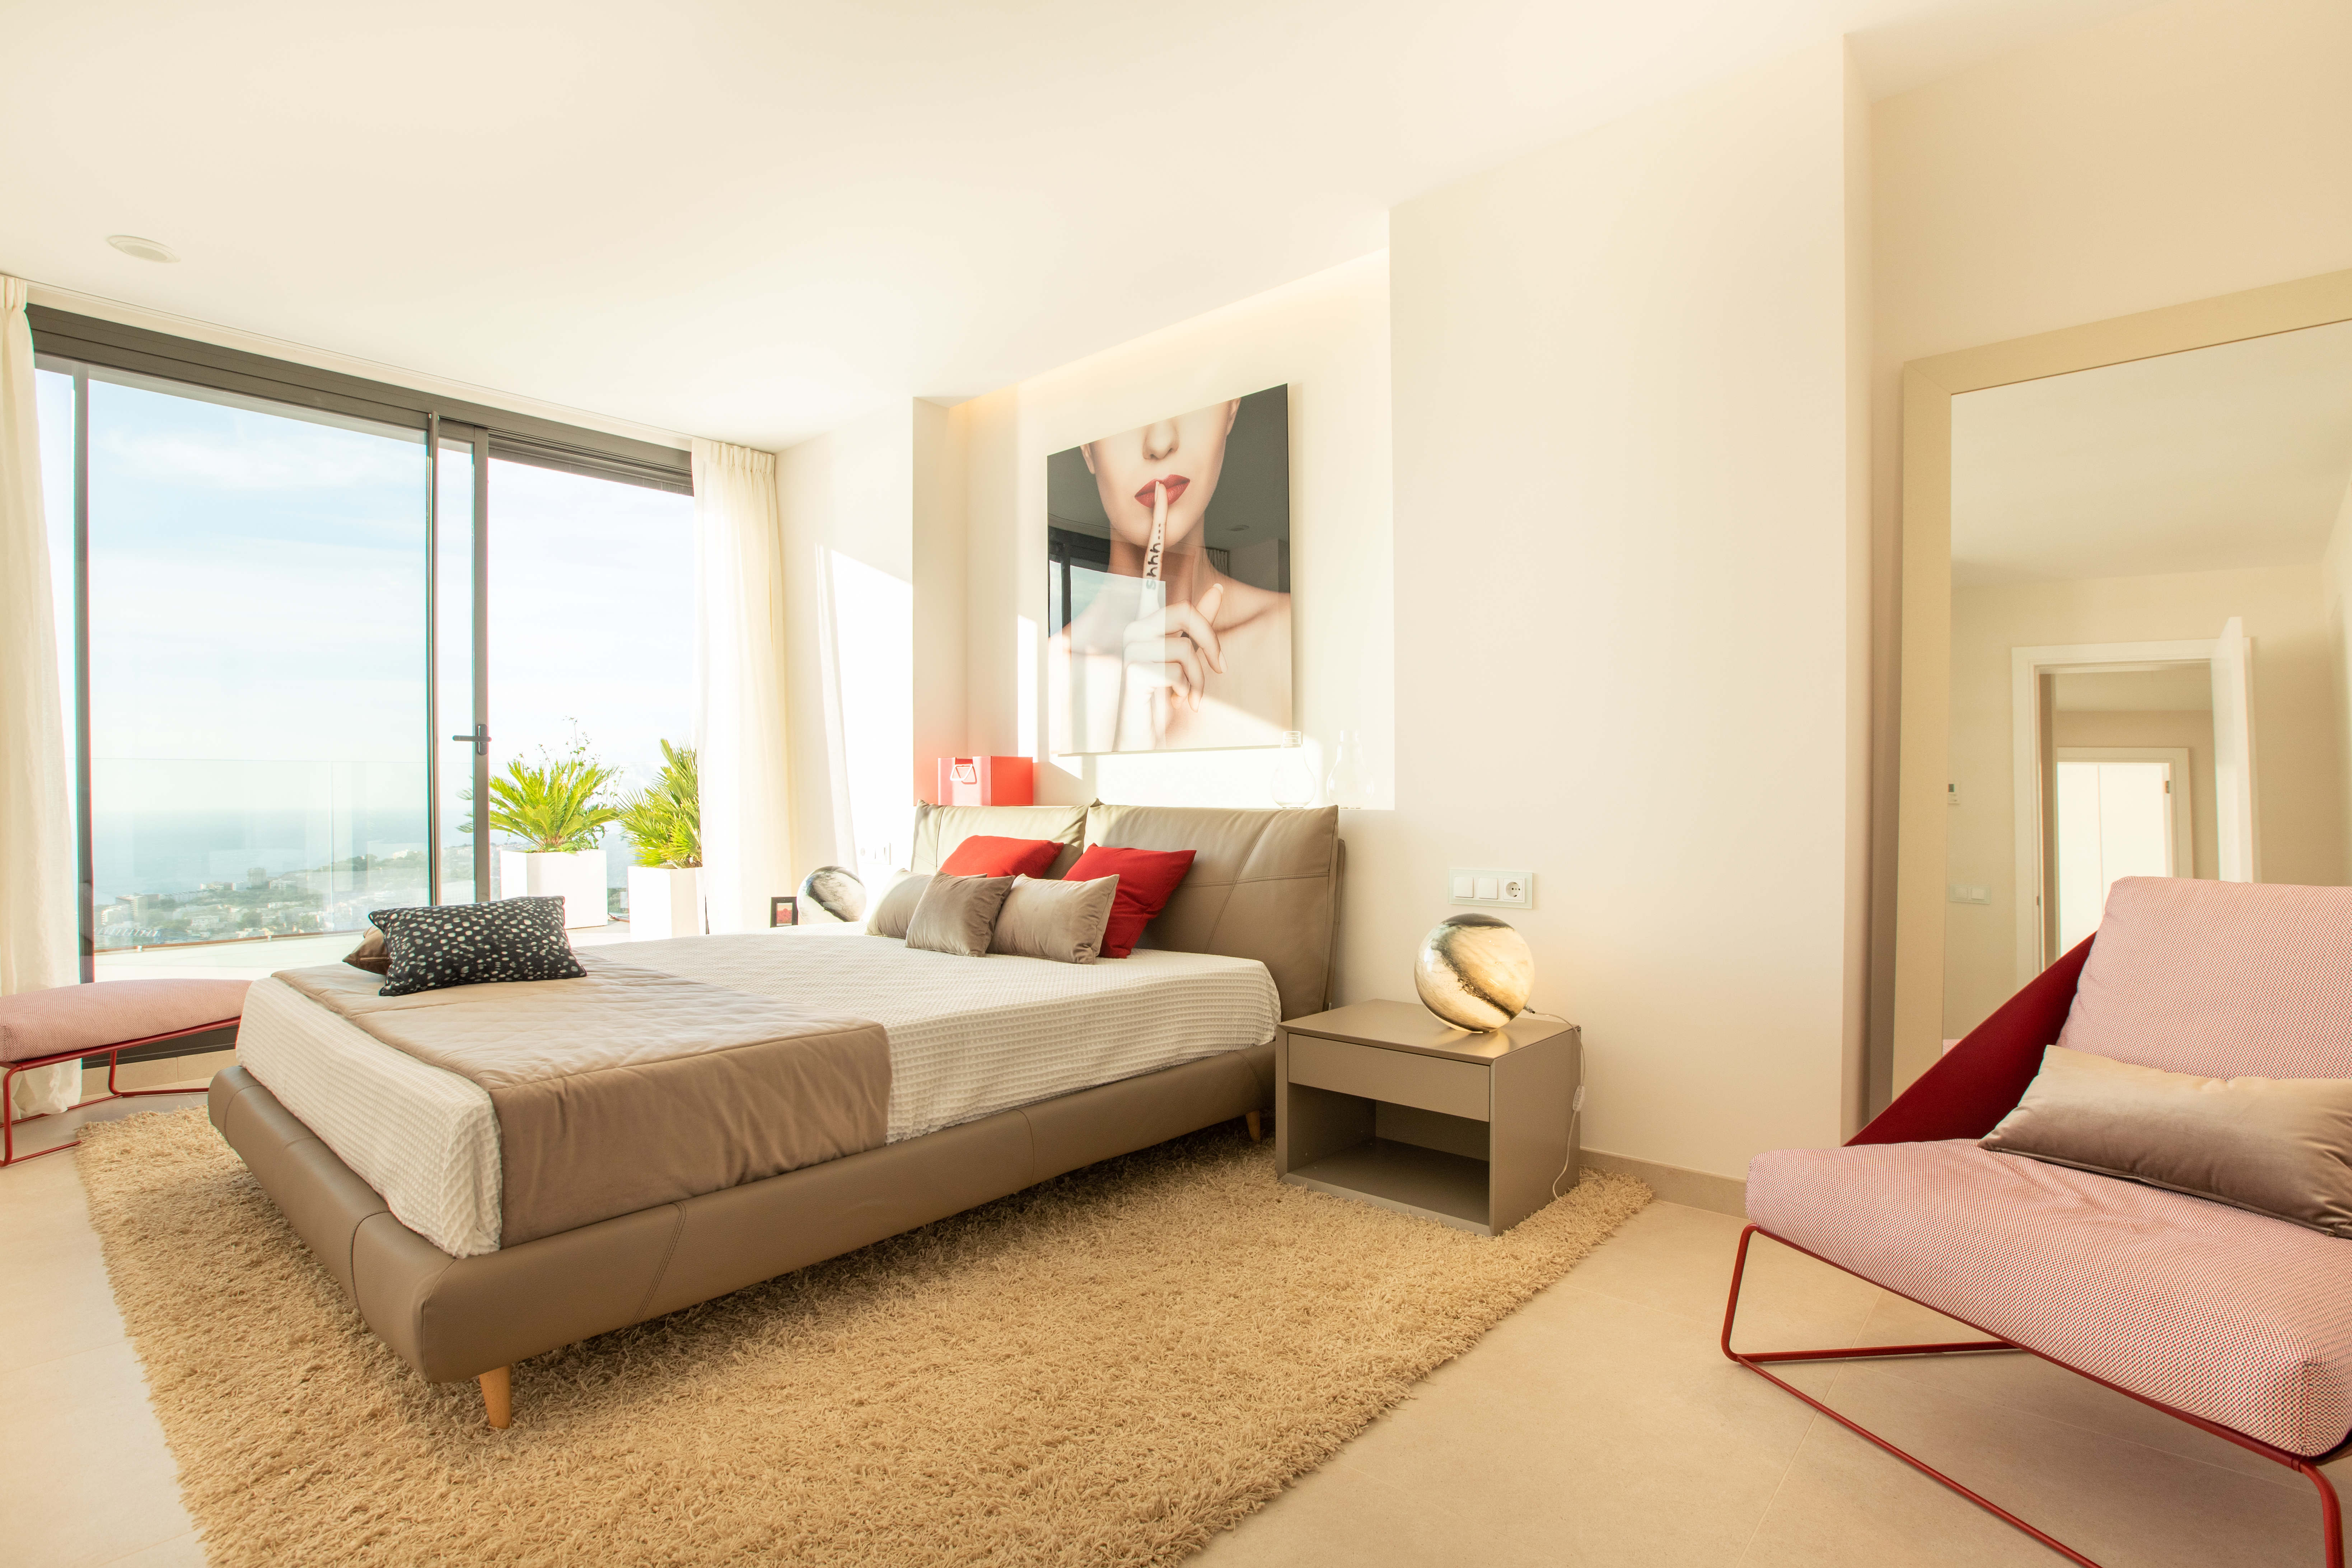 New Luxury 4 Bedroom Penthouse Duplex in Palma